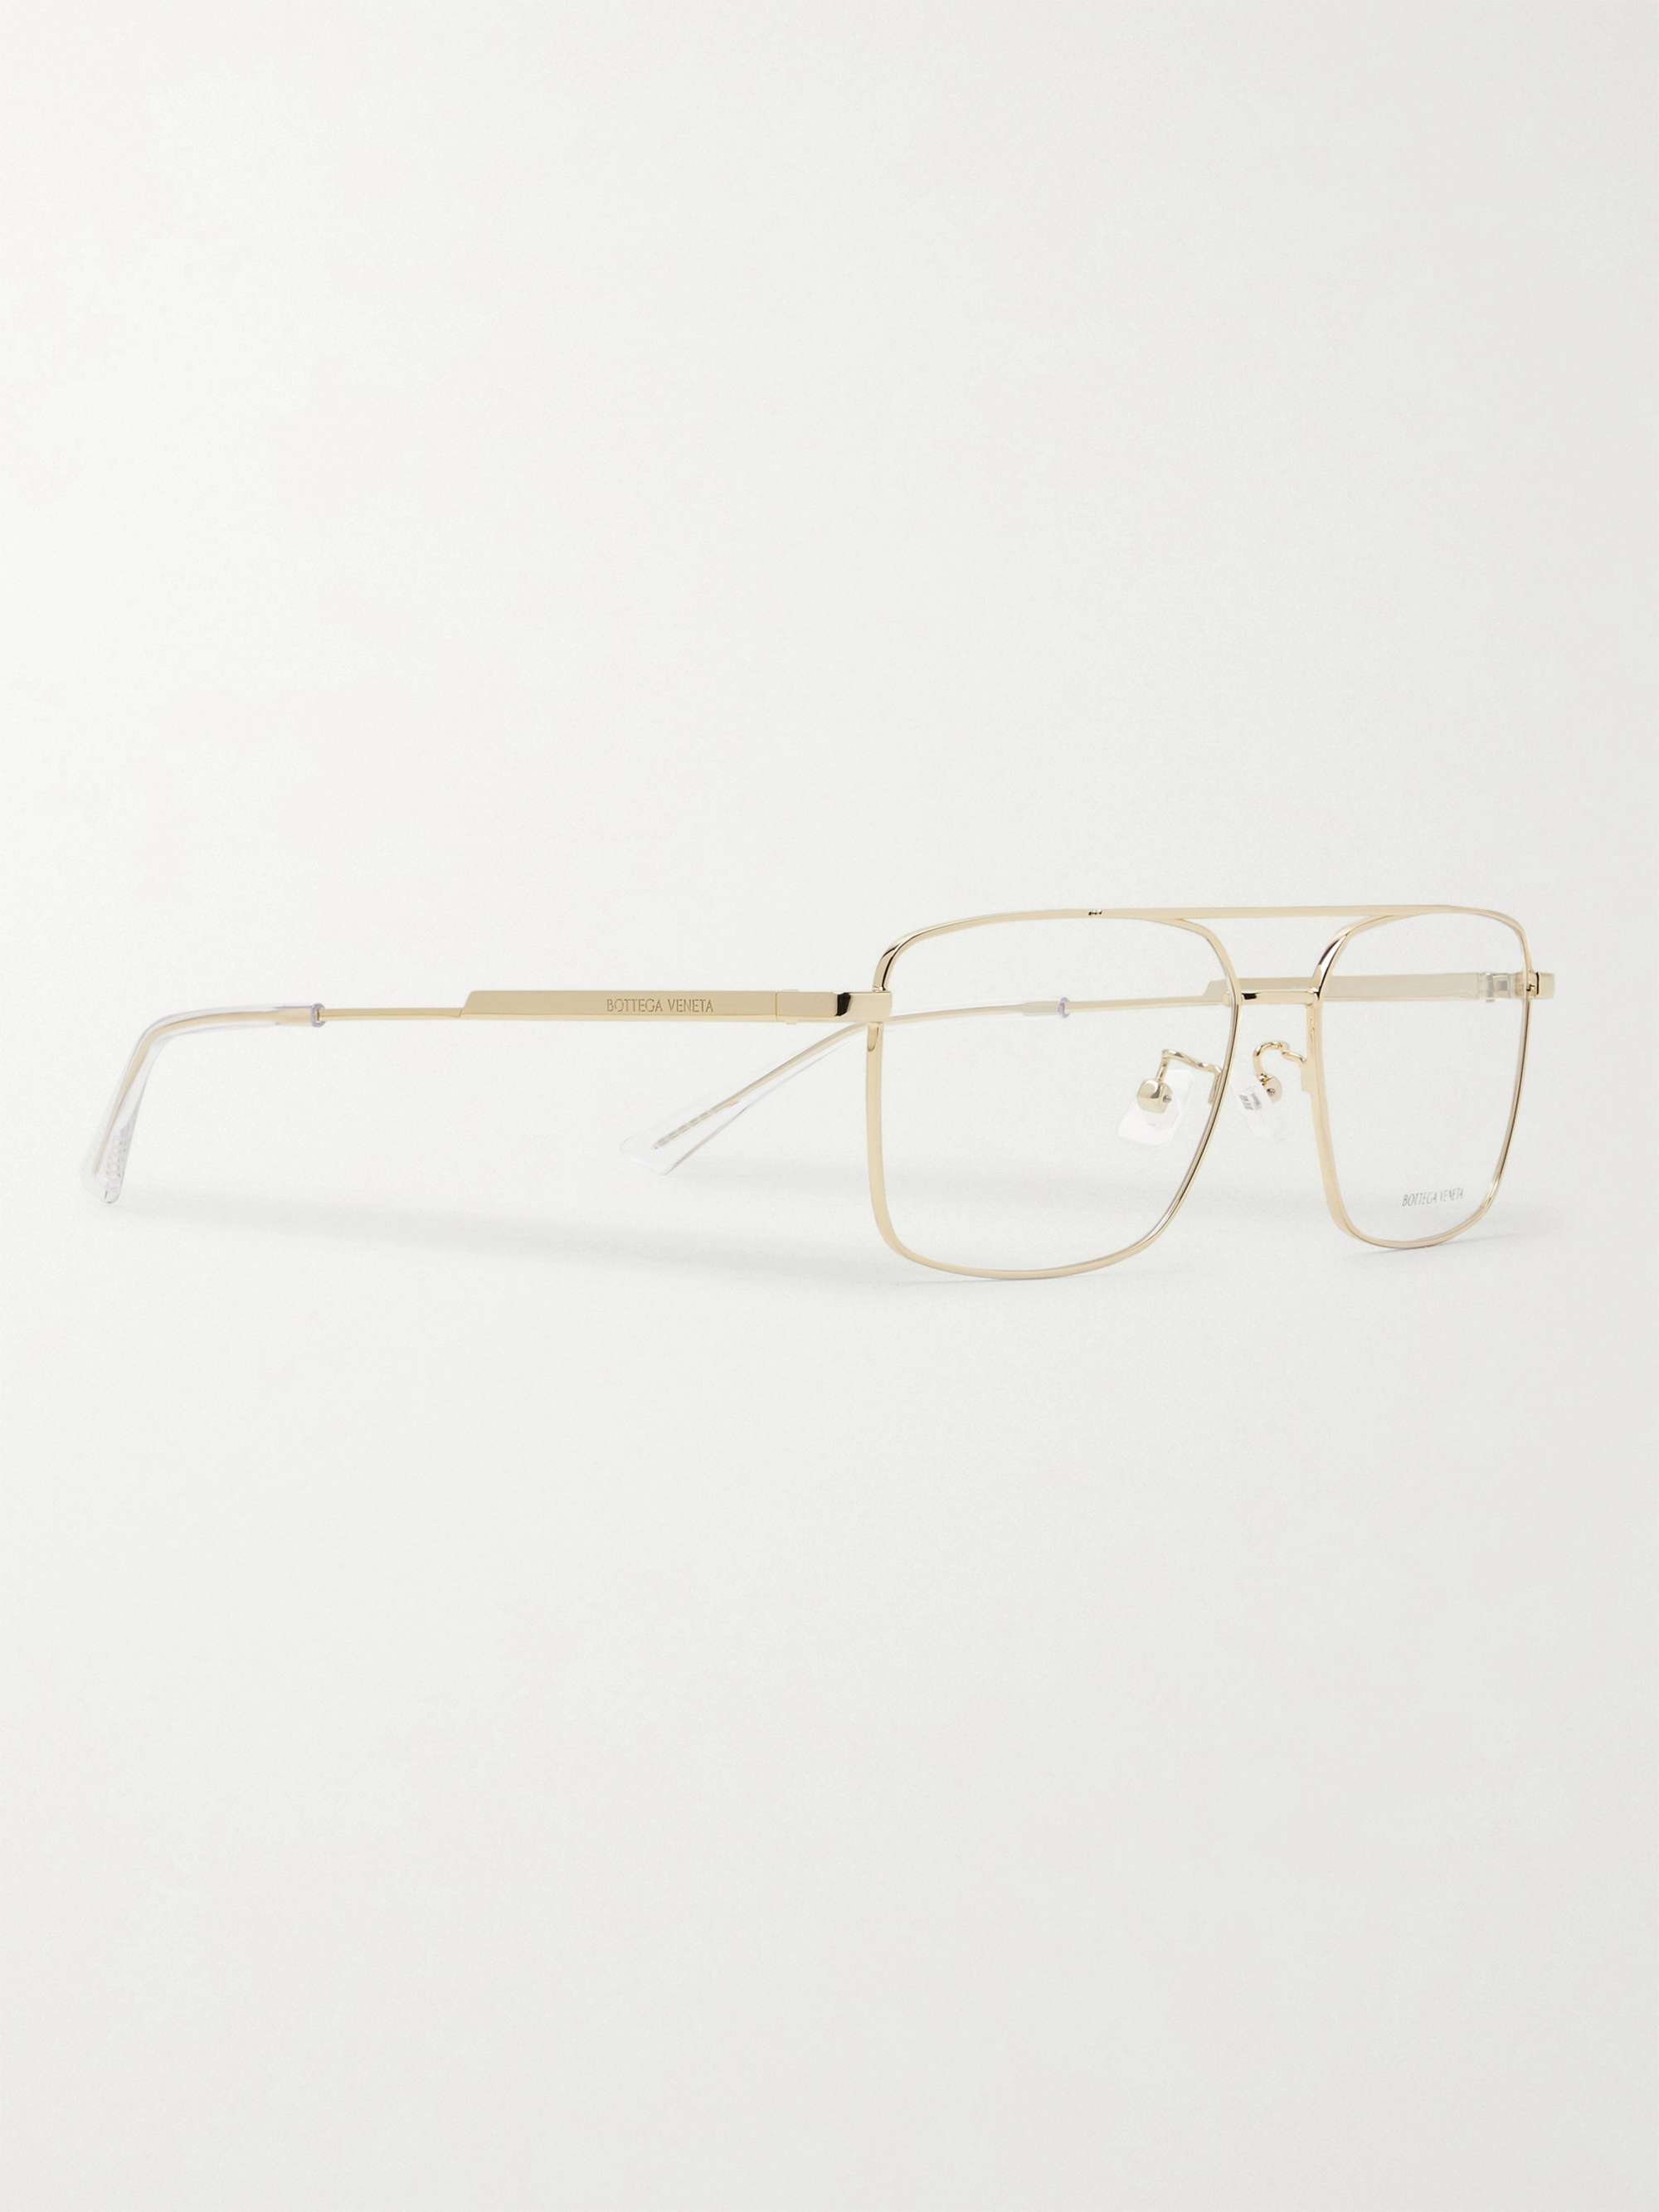 BOTTEGA VENETA EYEWEAR Aviator-Style Gold-Tone Optical Glasses